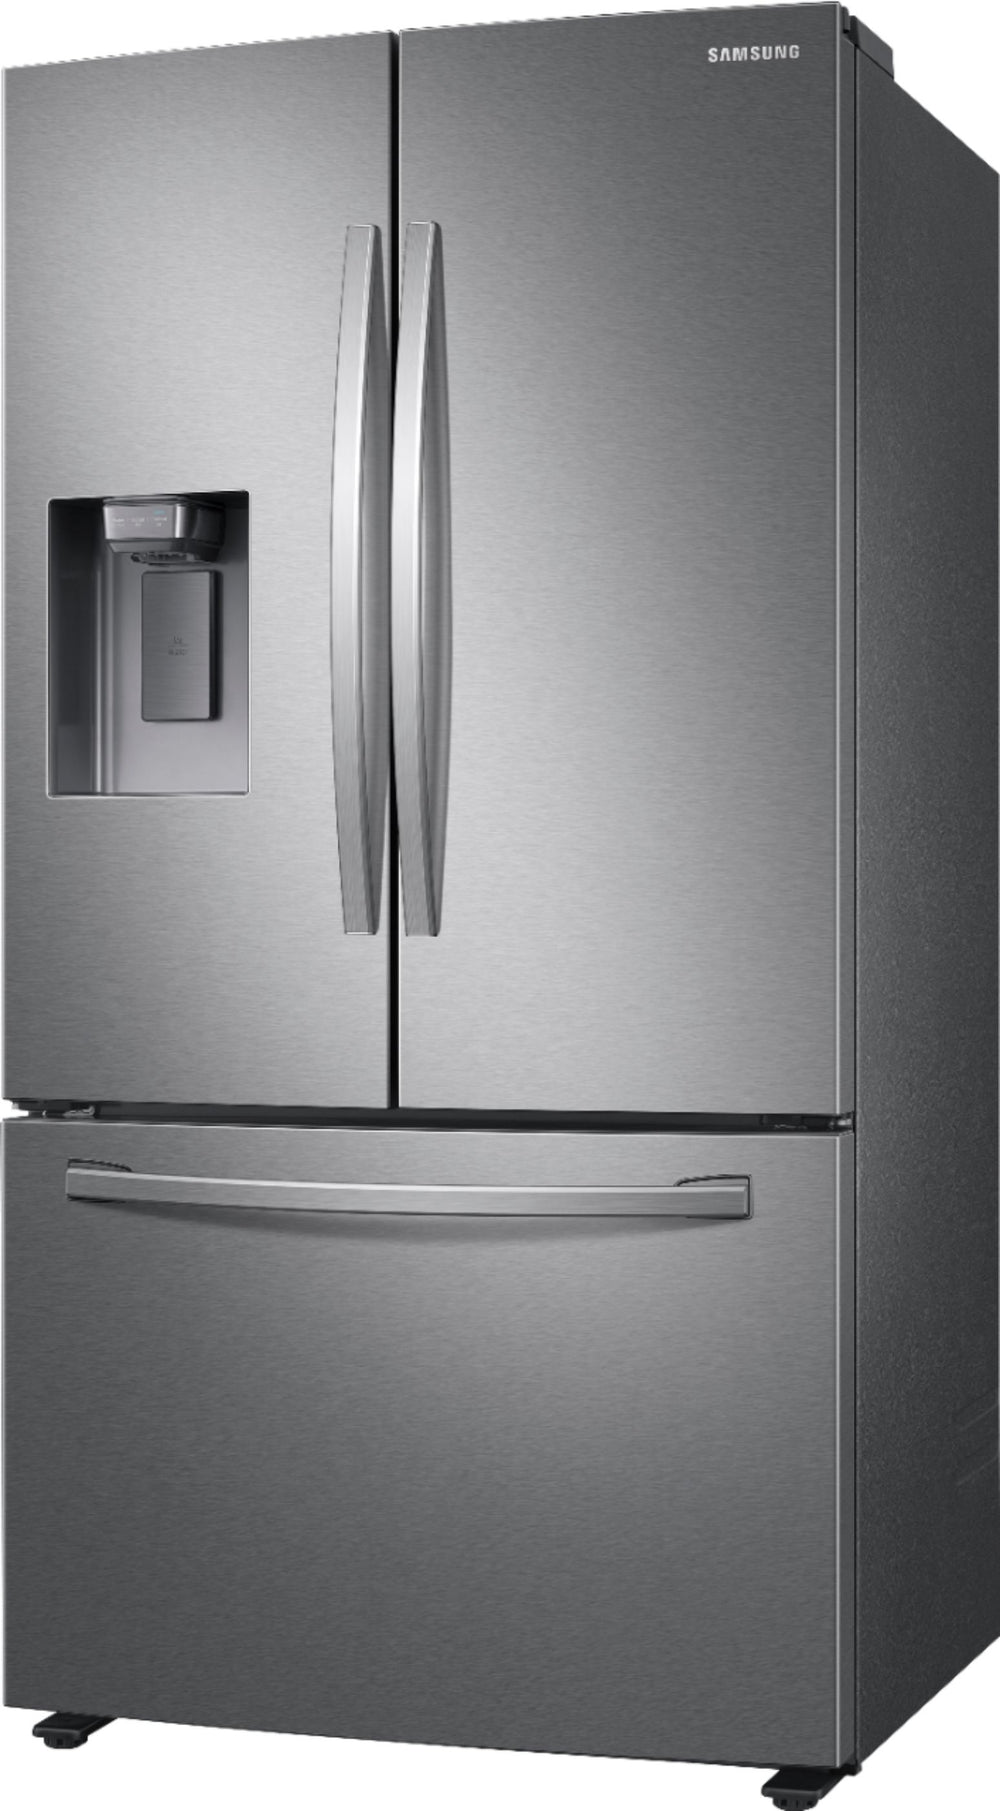 Samsung - 27 cu. ft. Large Capacity 3-Door French Door Refrigerator with External Water & Ice Dispenser - Stainless steel_1